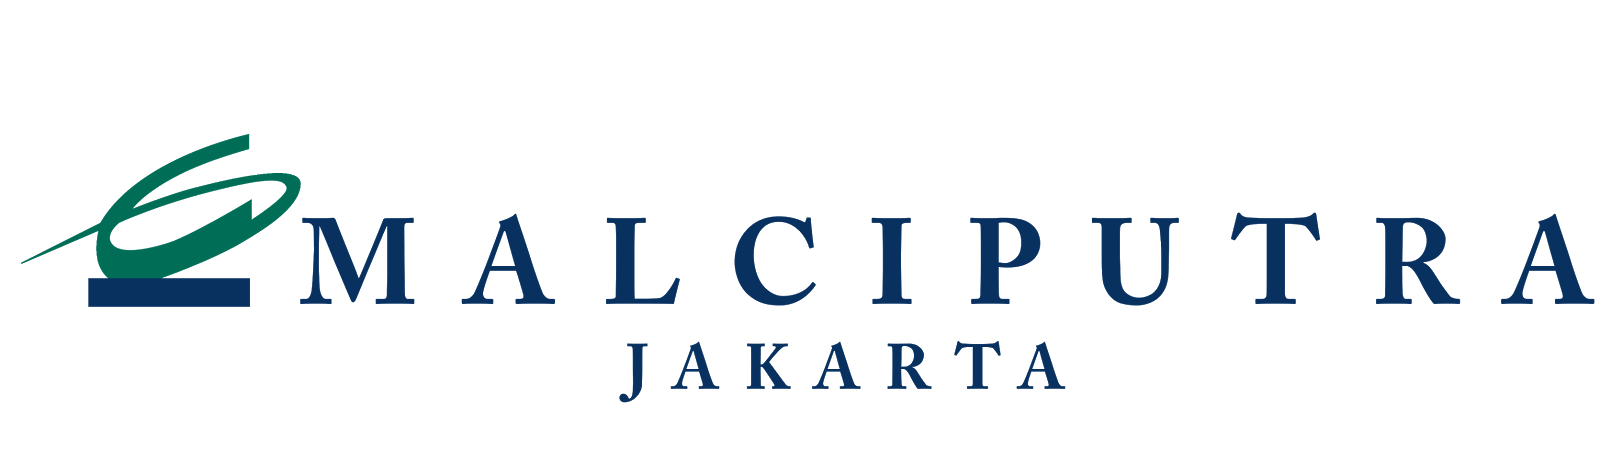 850 buah Lampion Bola untuk MAL CIPUTRA JAKARTA